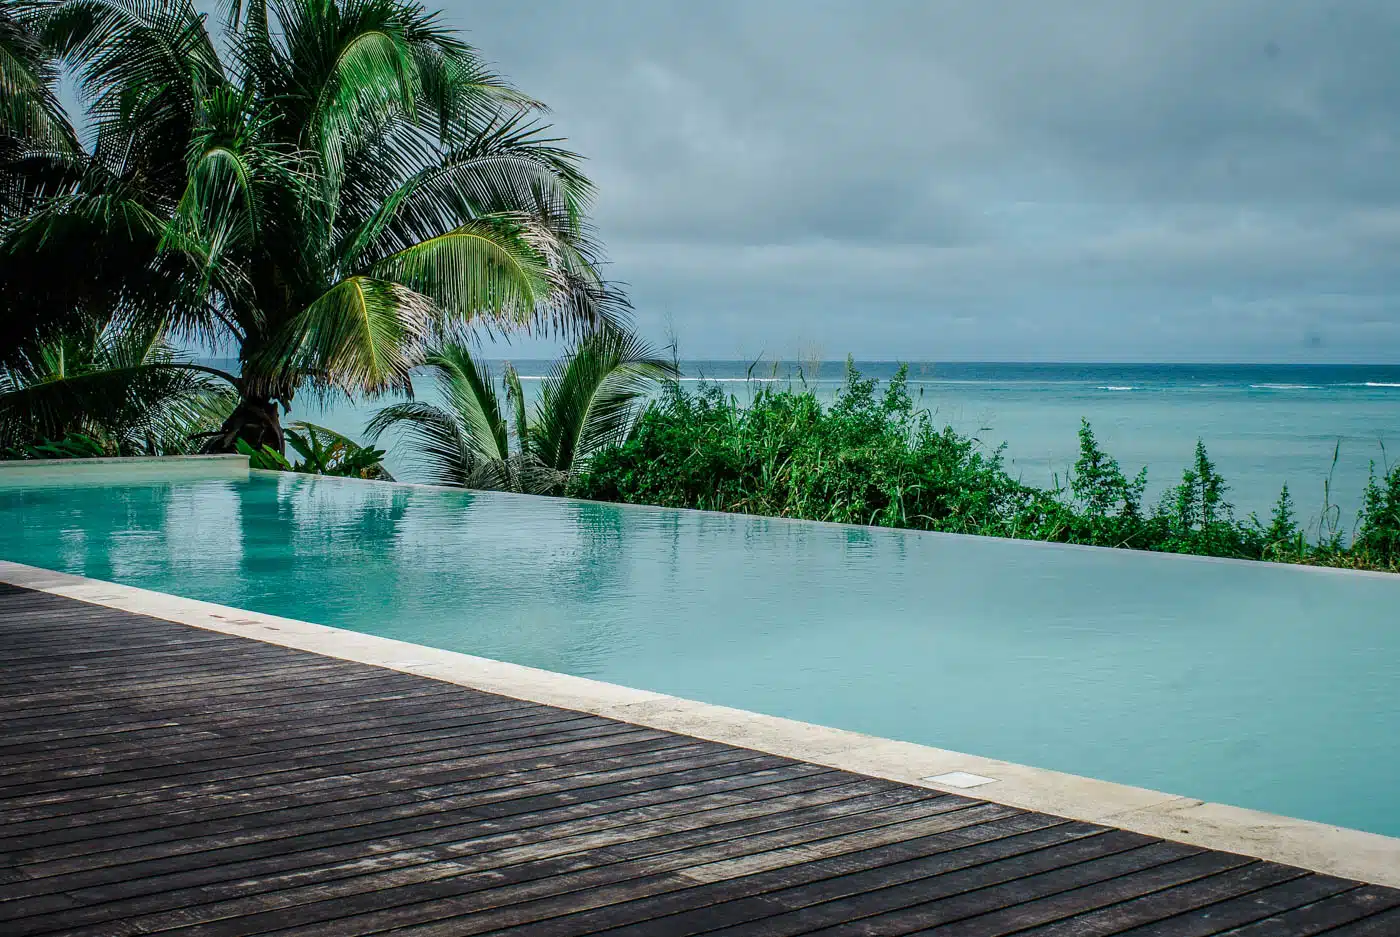 Infinity pool - Melia Zanzibar. Tanzania and Zanzibar - an exotic adventure. 